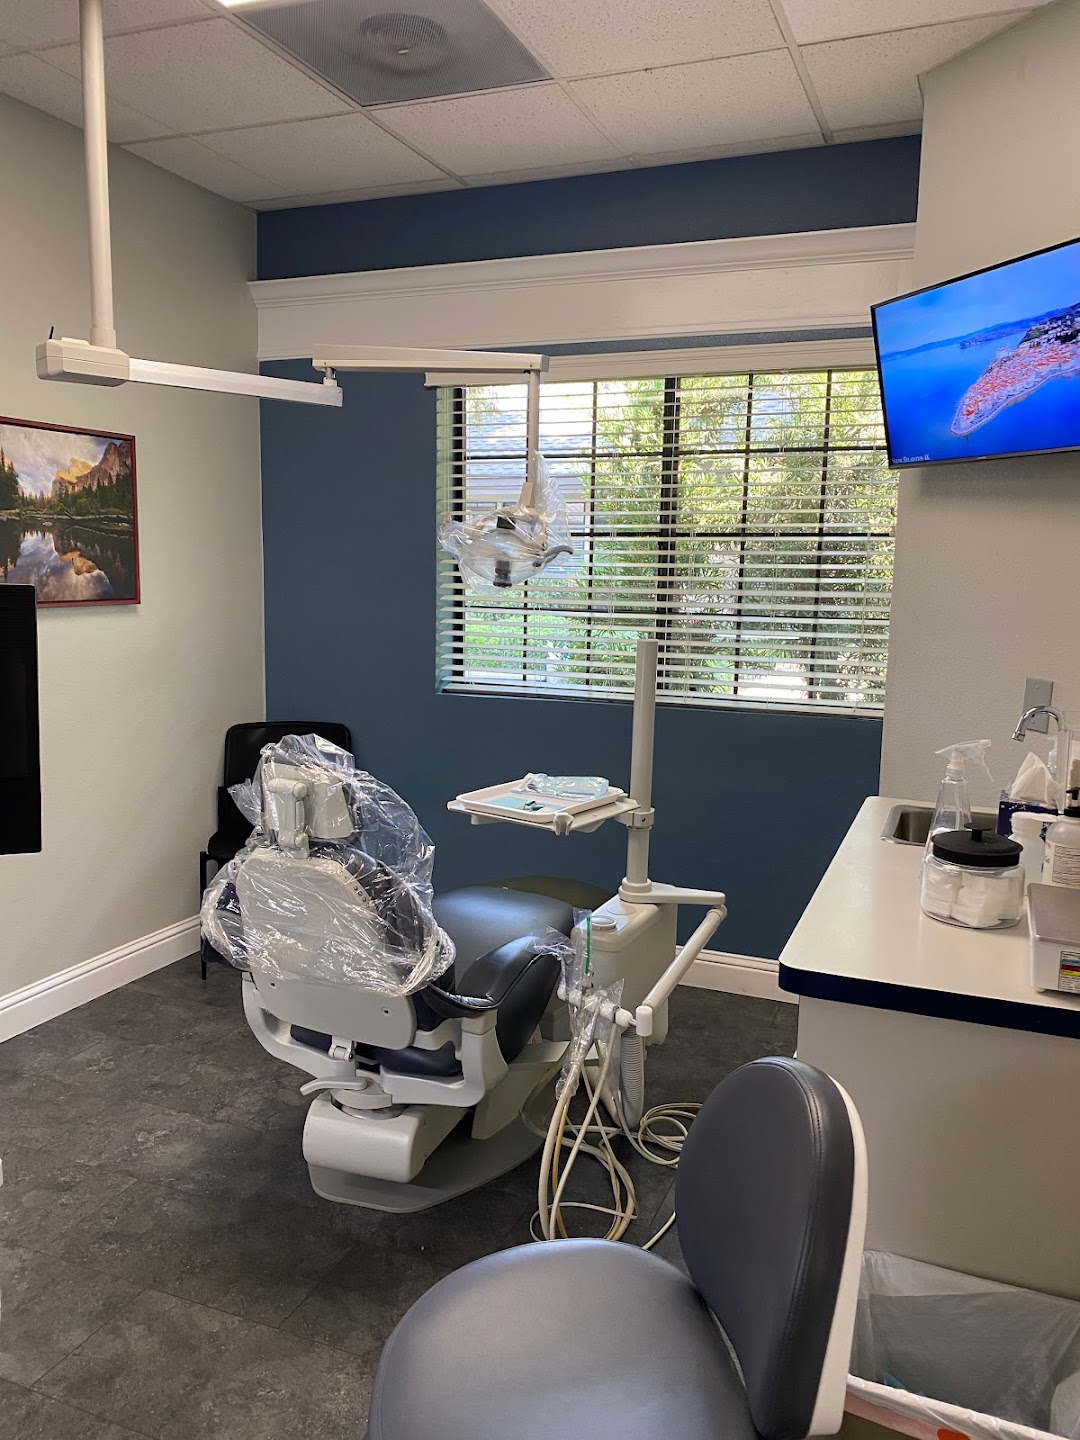 Denture and Implant Center of Fresno